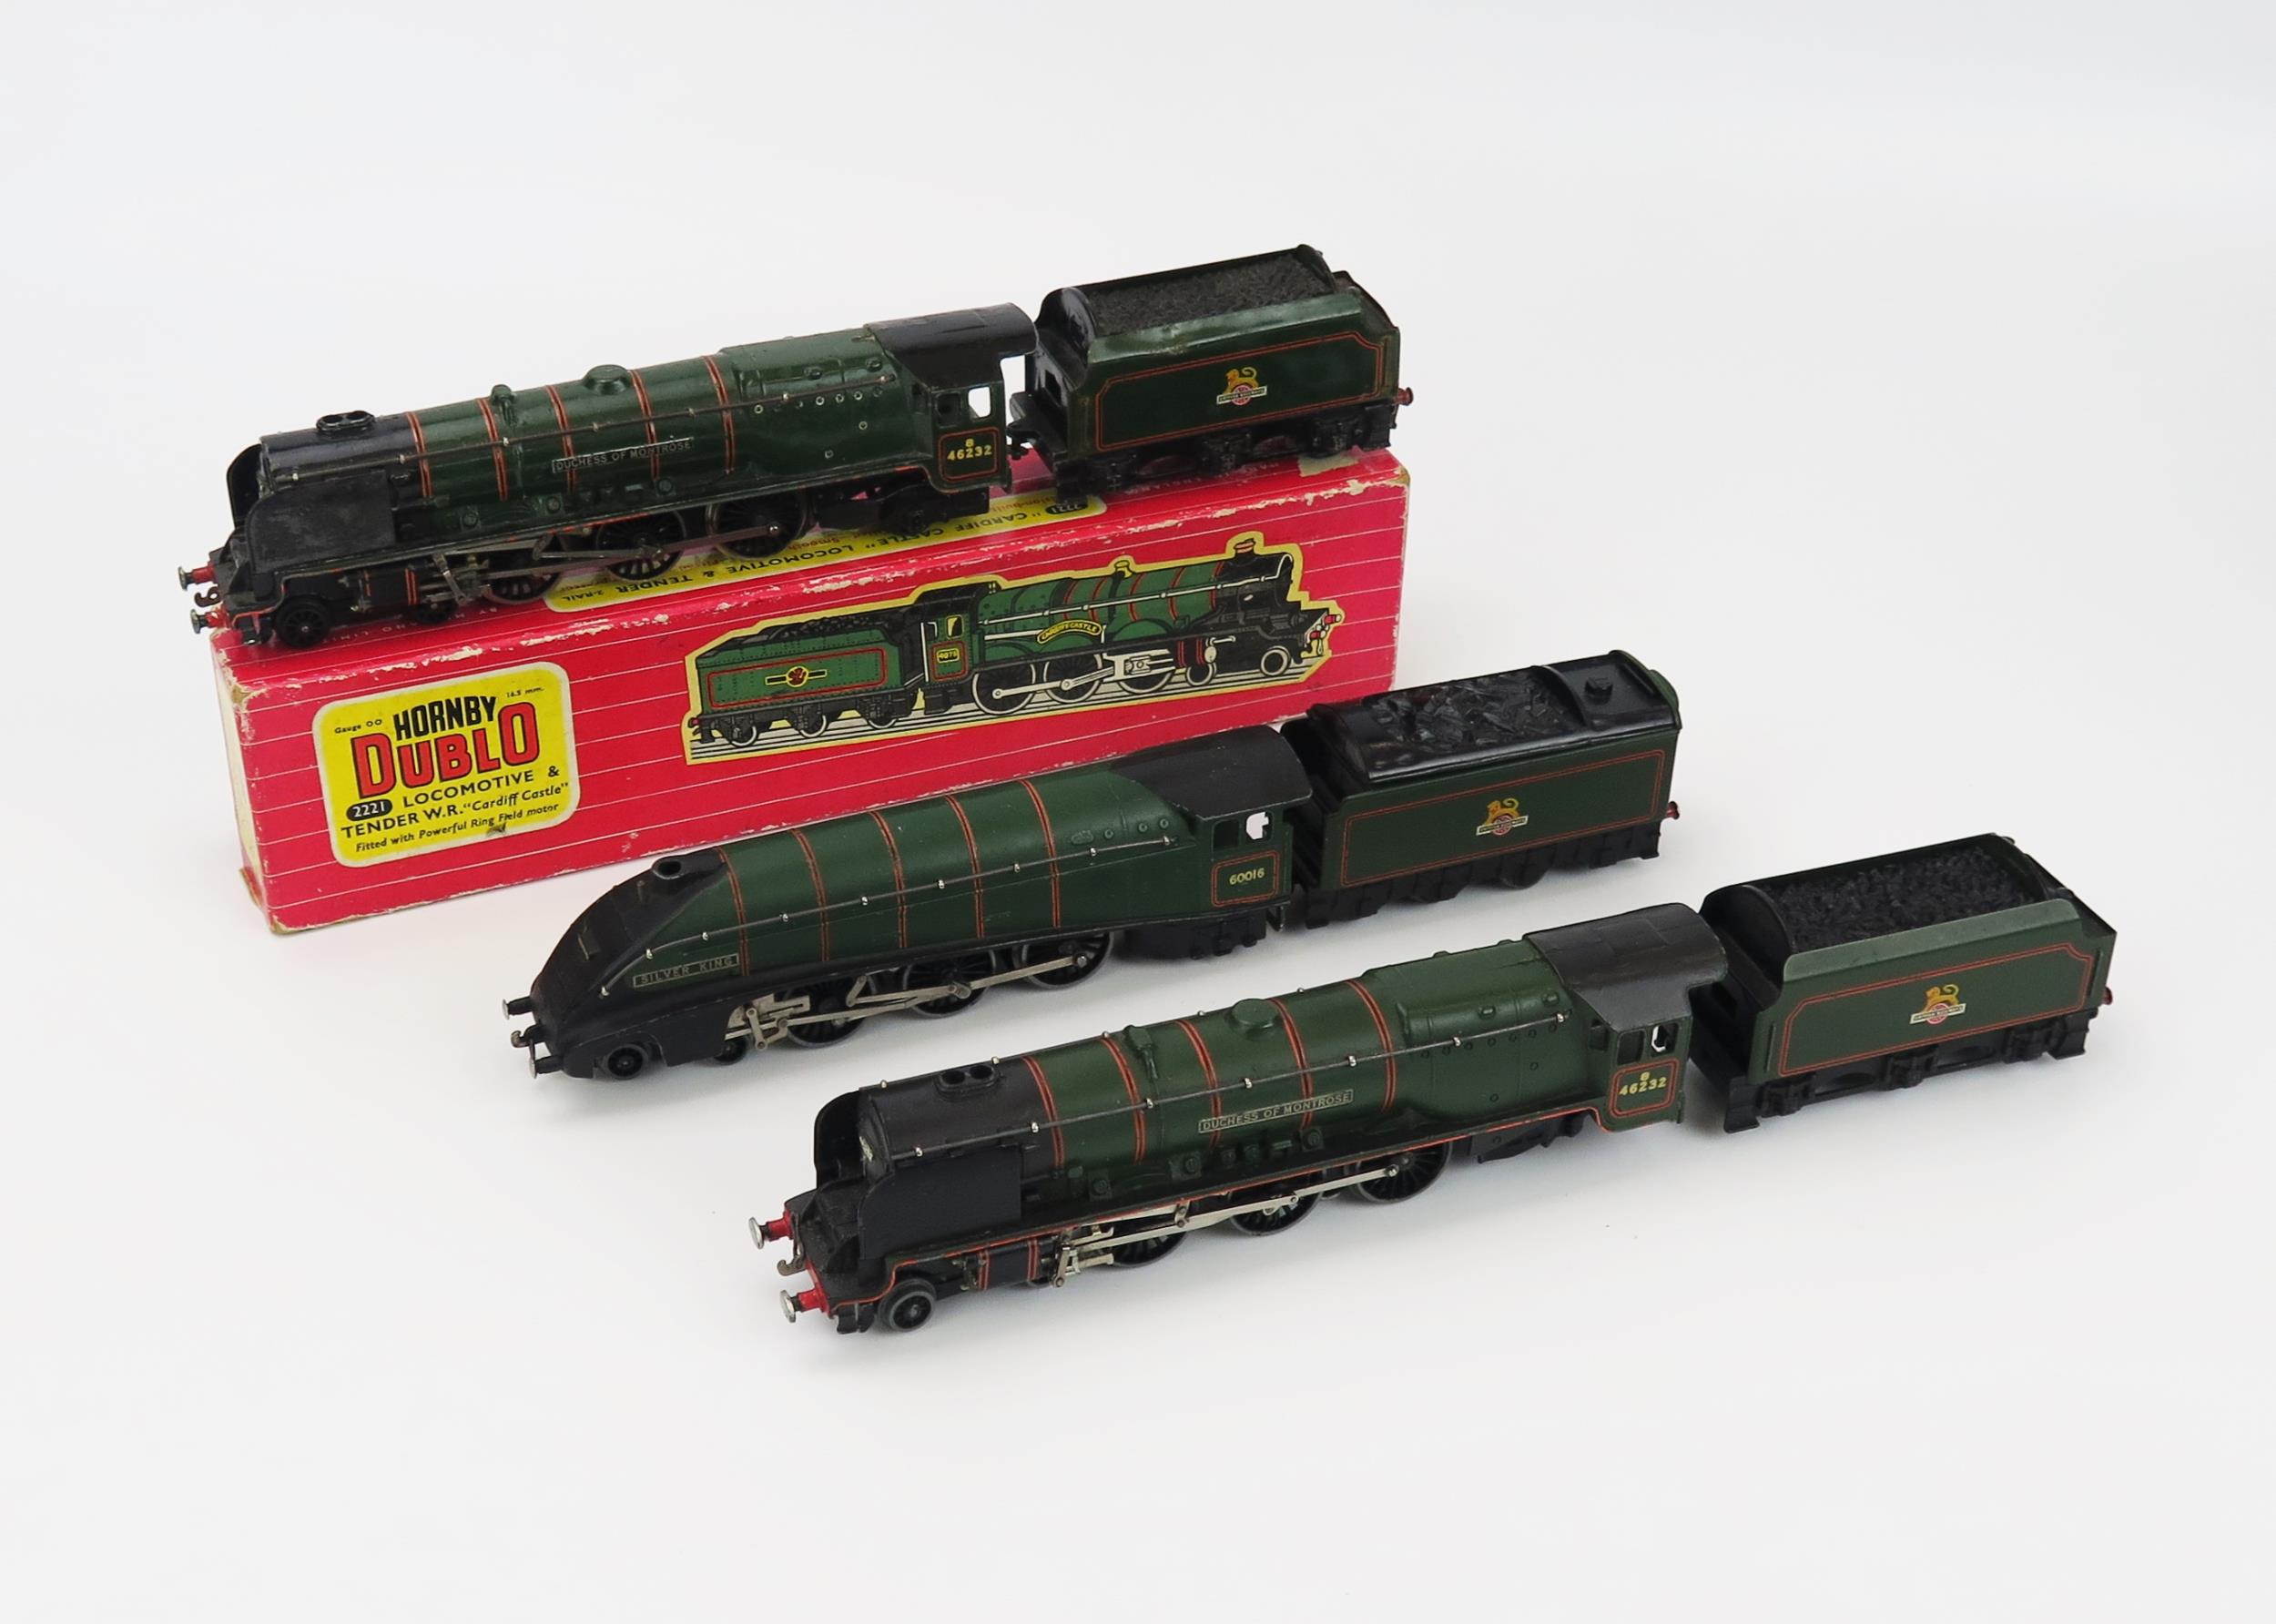 Hornby Dublo OO Gauge 3 Rail BR 4-6-2 Locomotive & Tender Group - EDL11 "SILVER KING" 60016, x2